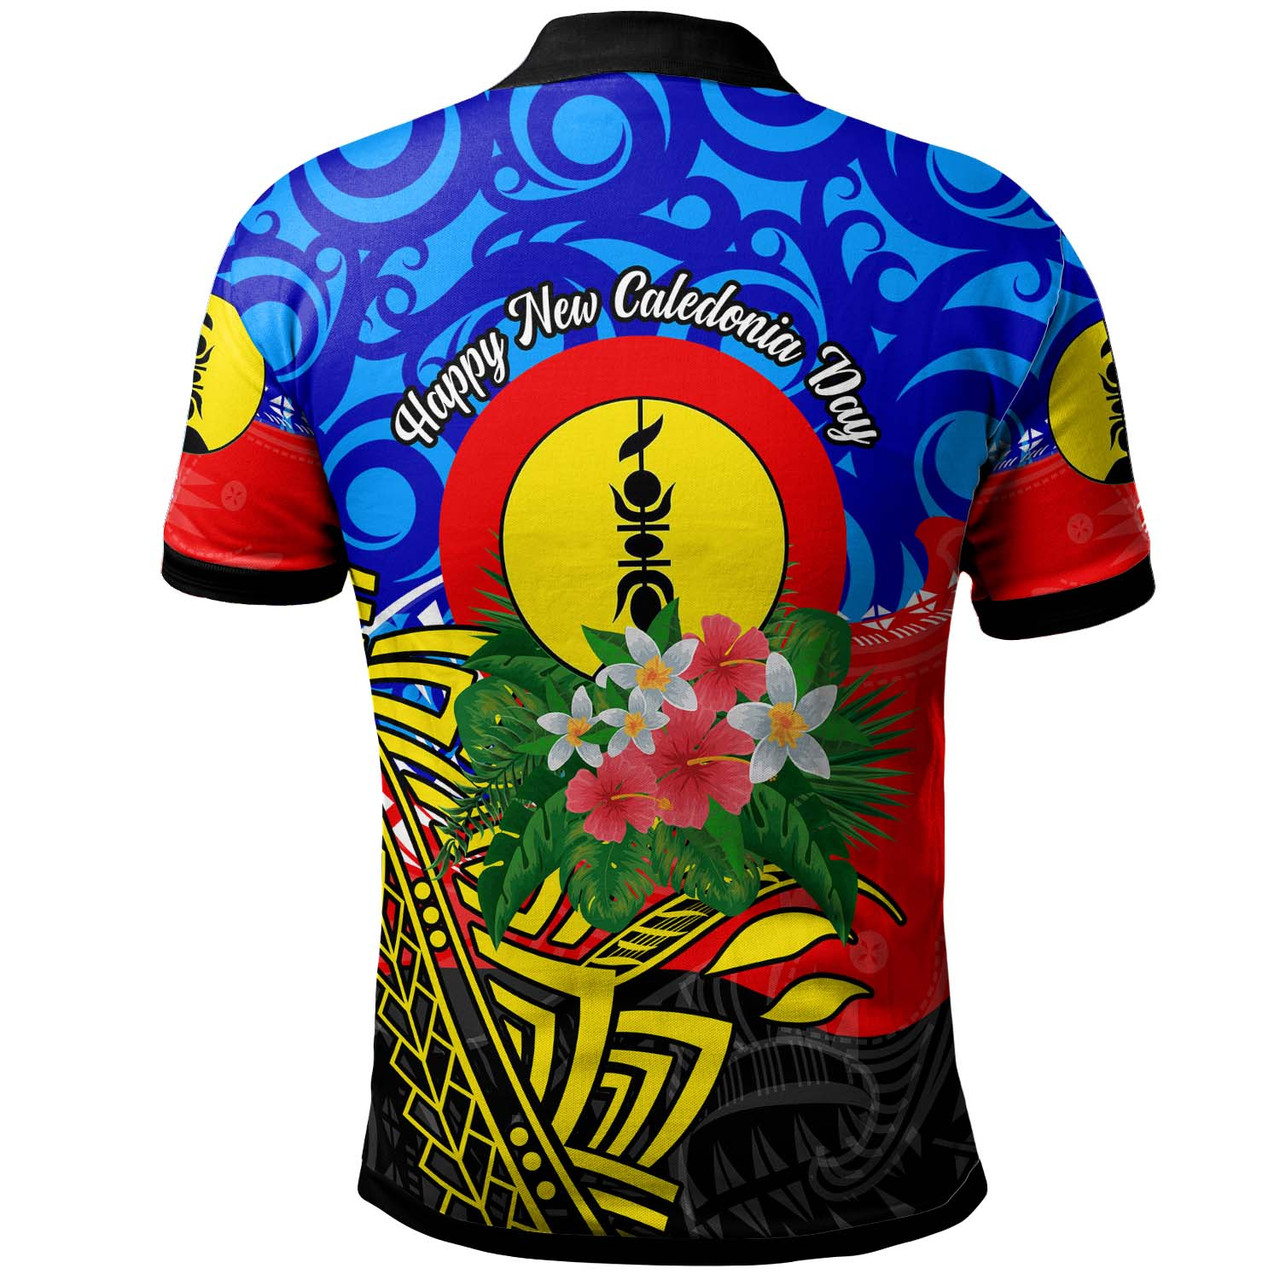 New Caledonia Polo Shirt - Custom Personalised "Land of Speech, Land of Sharing" with Polynesian Polo Shirt